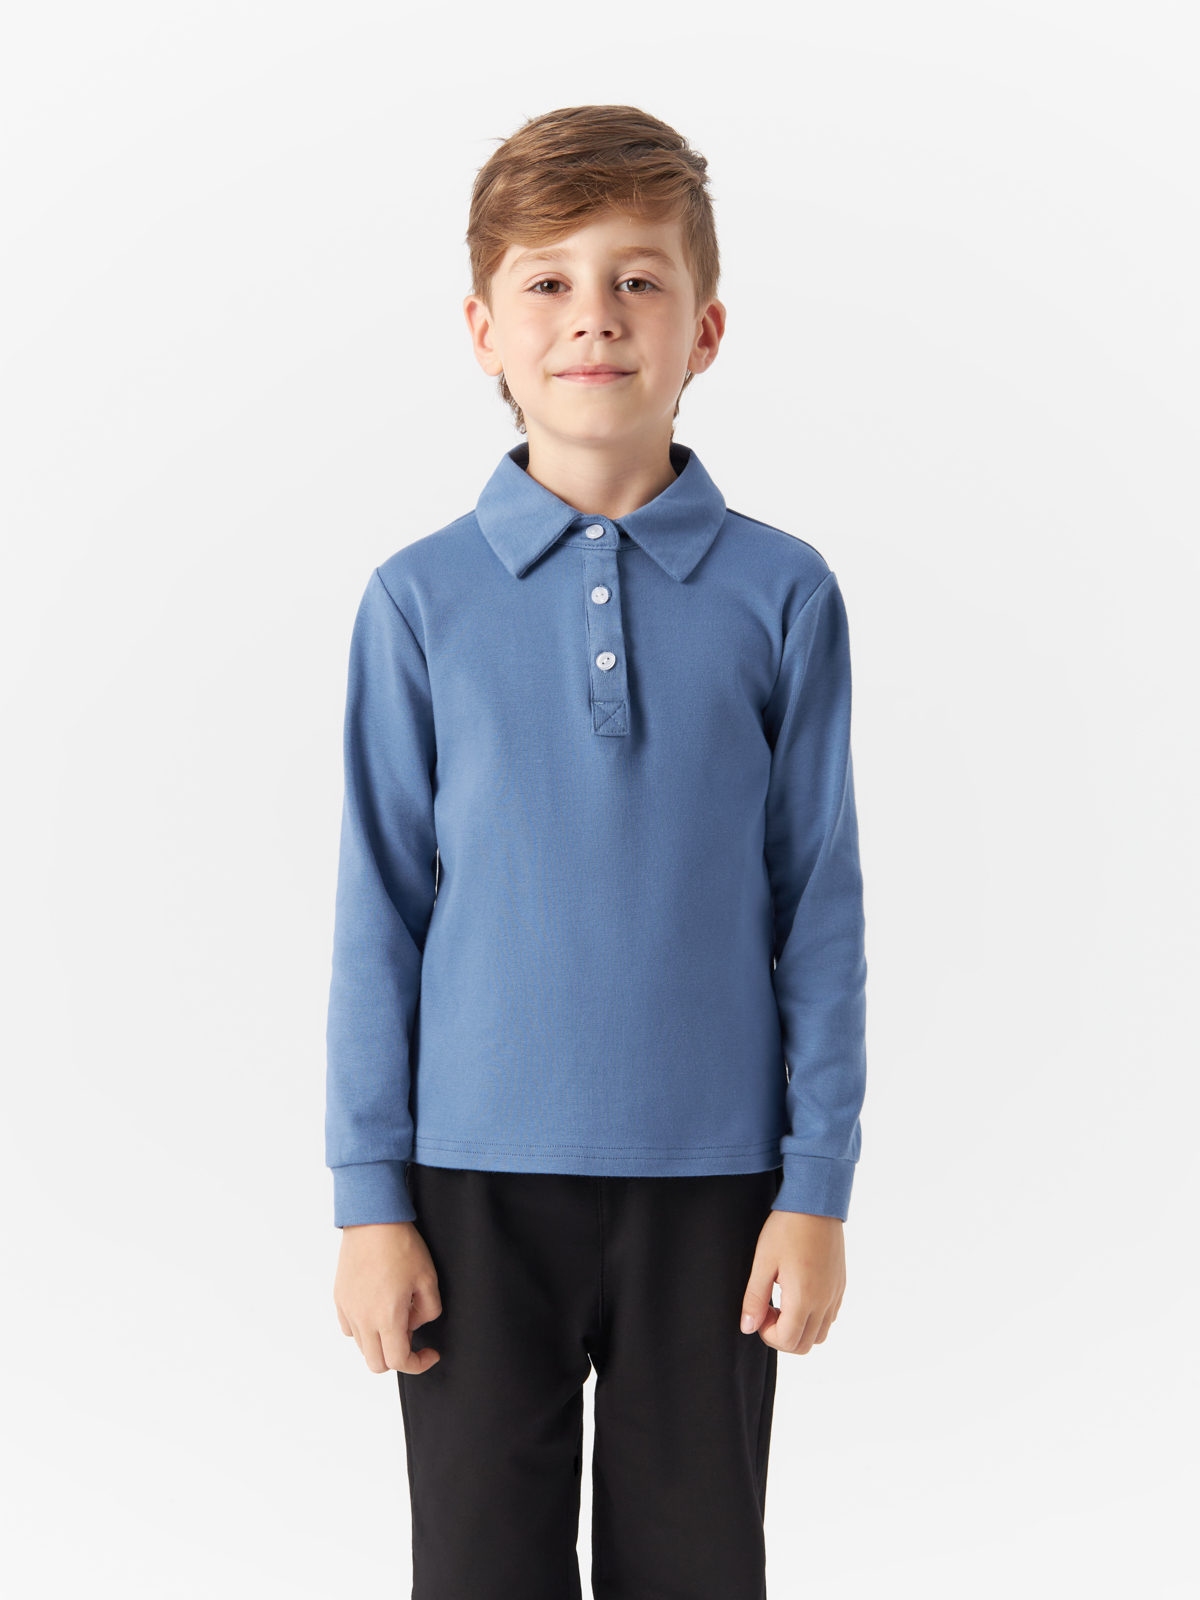 Рубашка Yiwu Xflot Supply Chain детская, BS-8blue, размер 140 см